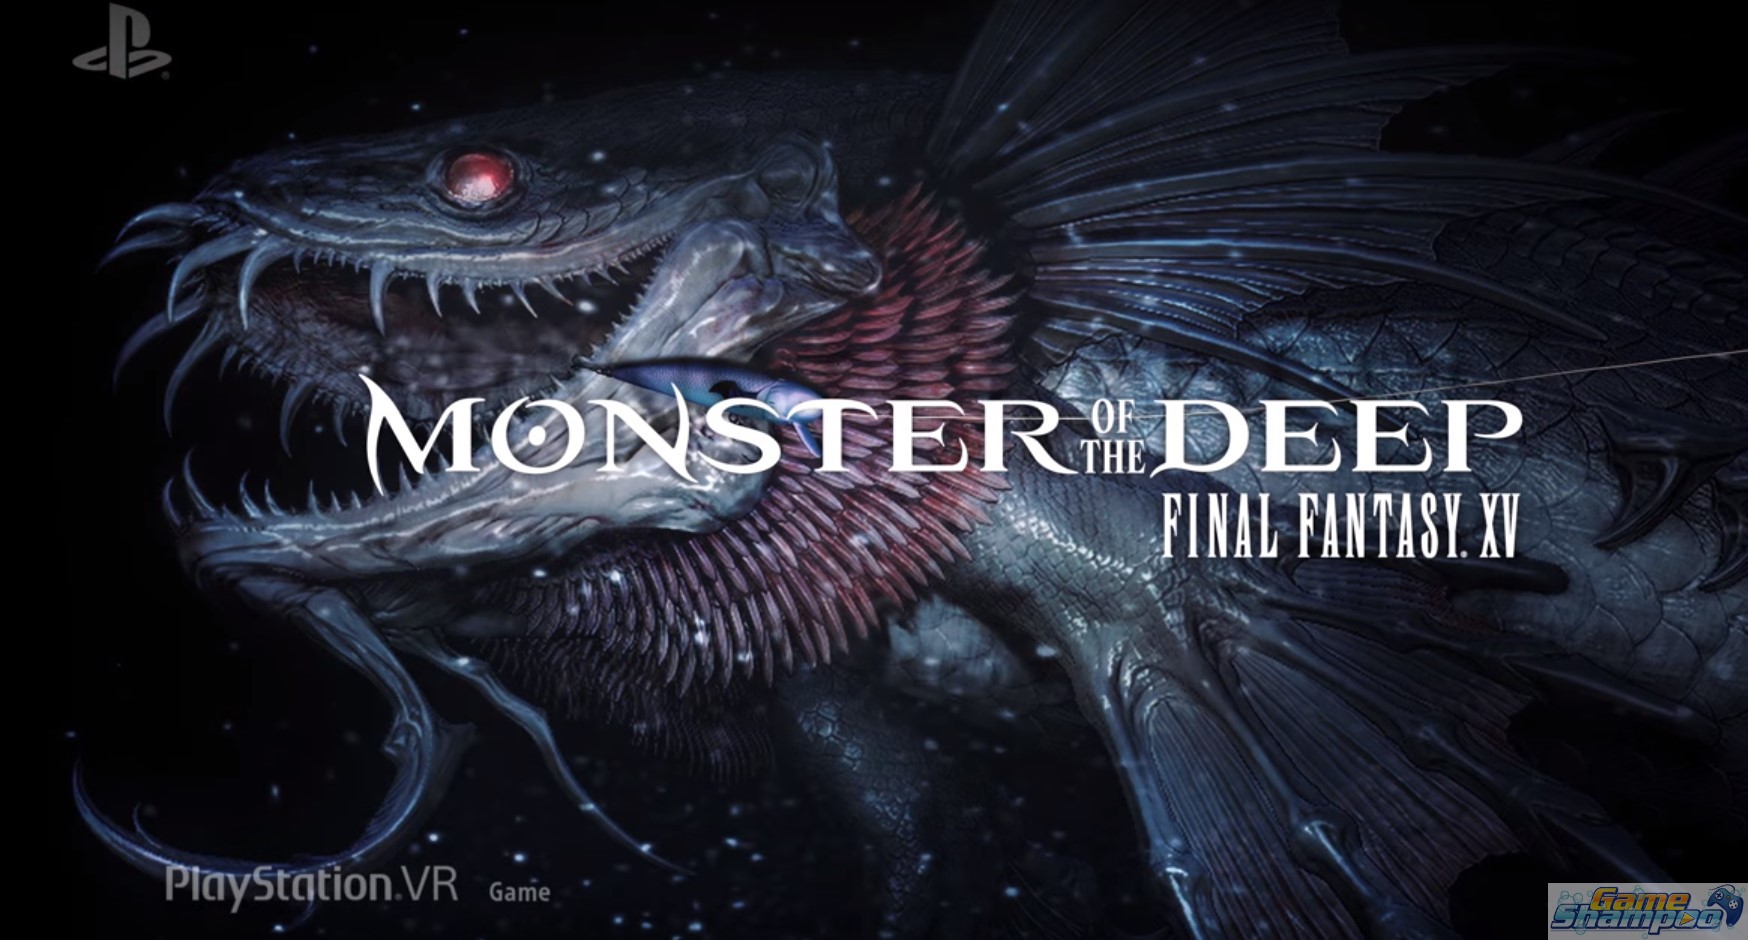 Sony E3 2017 Final Fantasy XV Monsters of the Deep VR